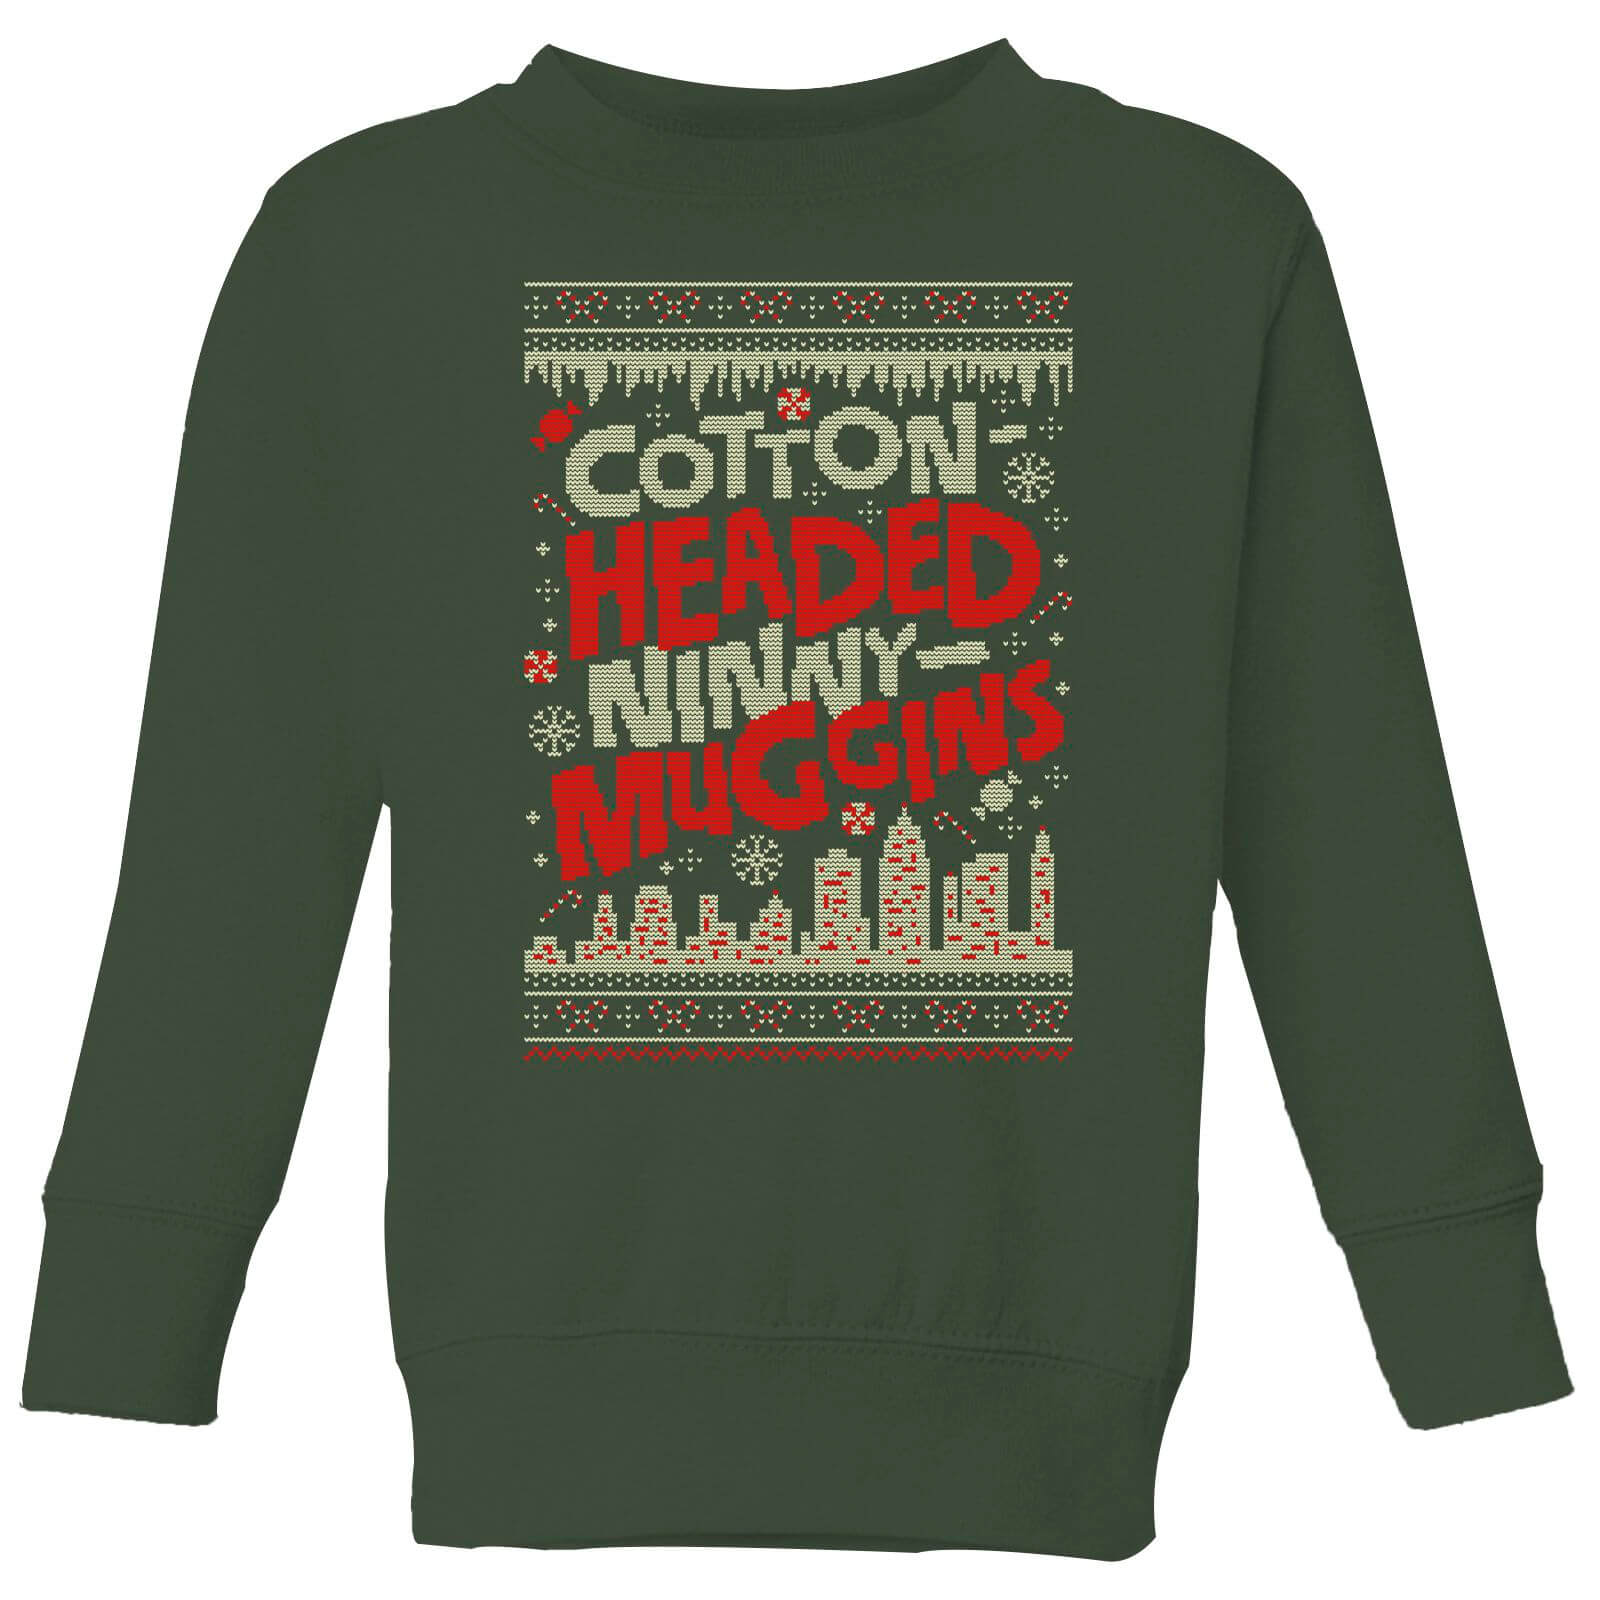 Elf Cotton-Headed-Ninny-Muggins Knit Kids' Christmas Sweatshirt - Forest Green - 3-4 Years